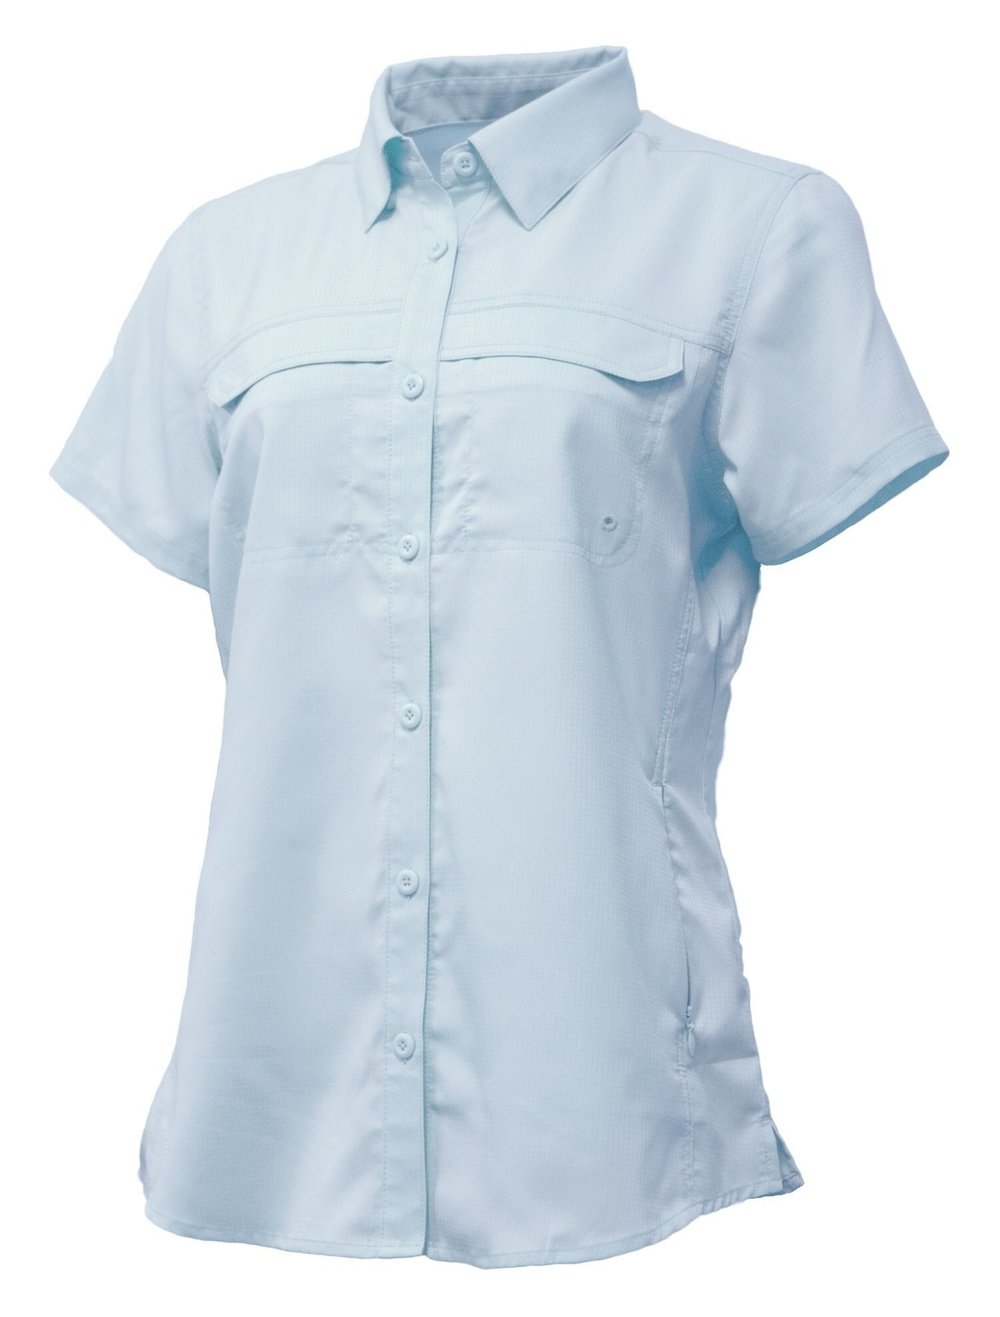 Fishing Shirt, Ladies Sublimation Fishing Shirt, Blank Shirt, Short Sleeve Fishing Shirt, Shirt for Her